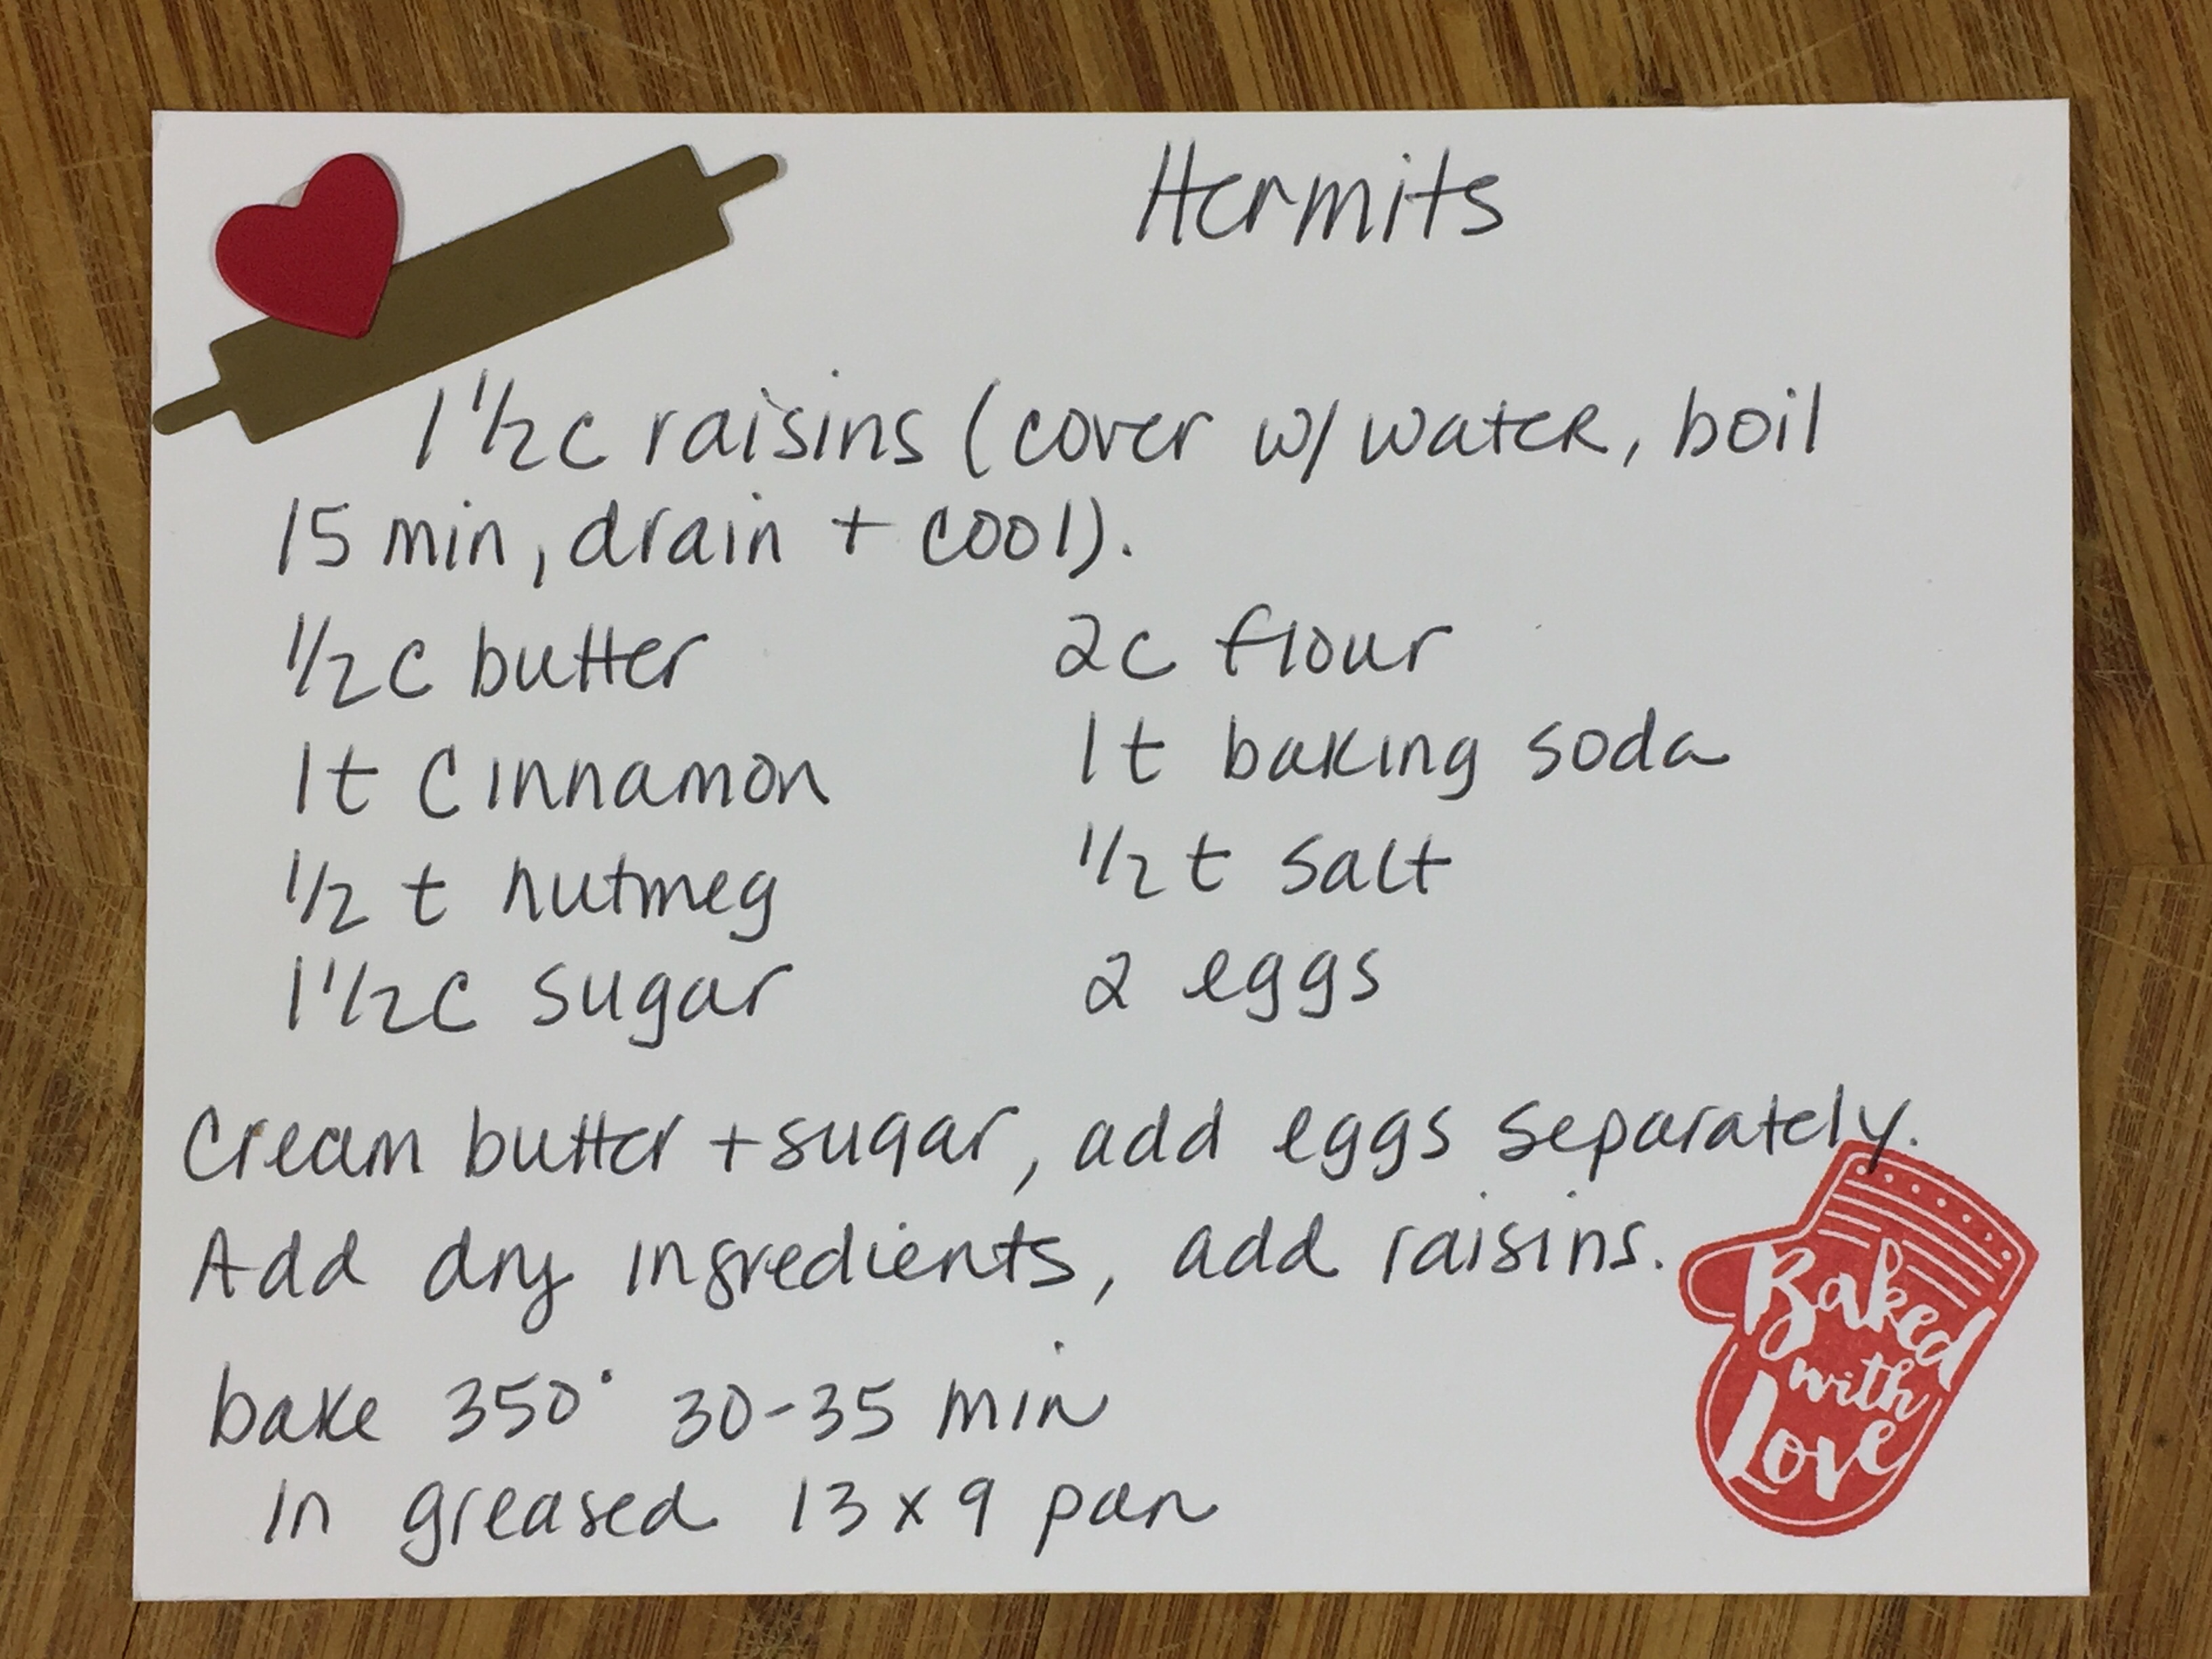 Hermits recipe